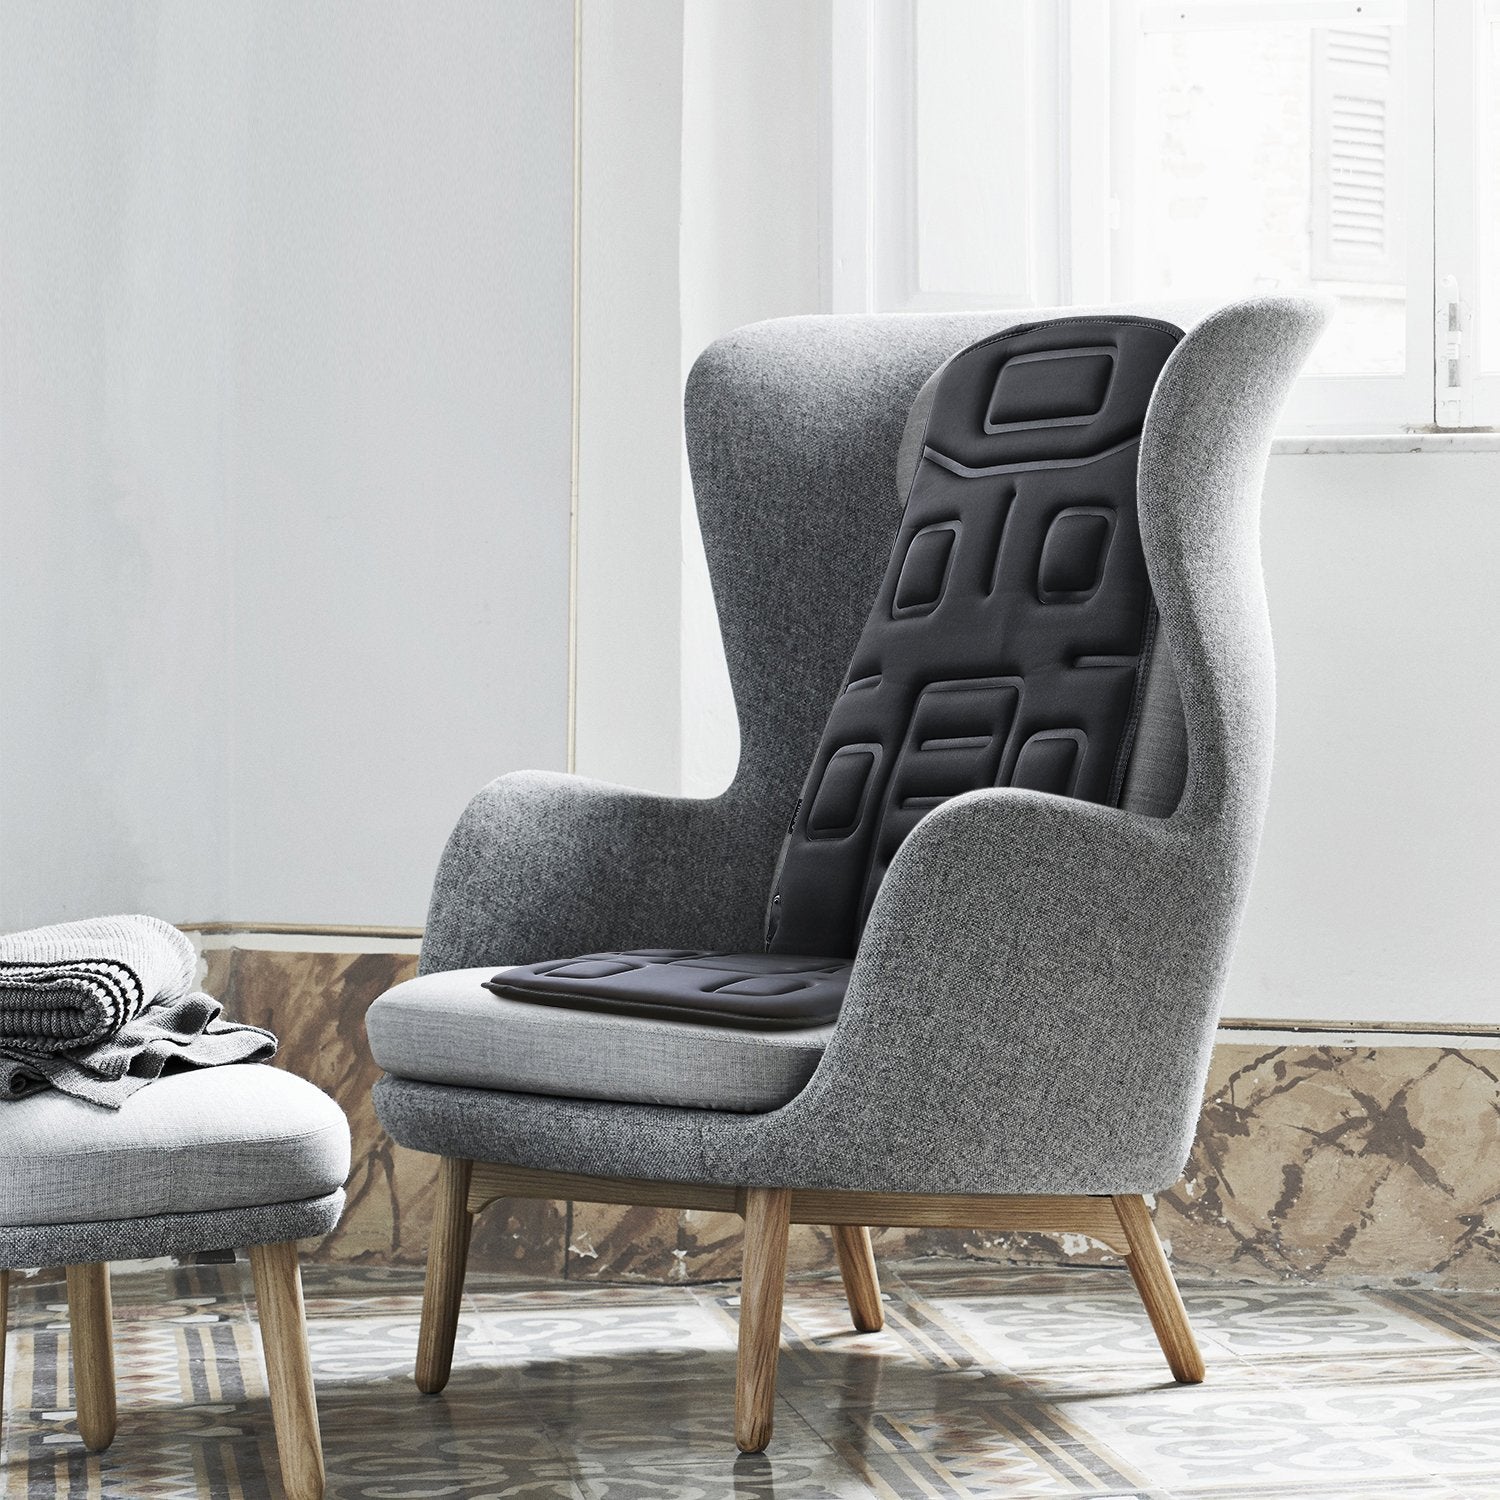 Load image into Gallery viewer, Naipo Portable Seat Cushion with Vibration and Heat - NAIPO
